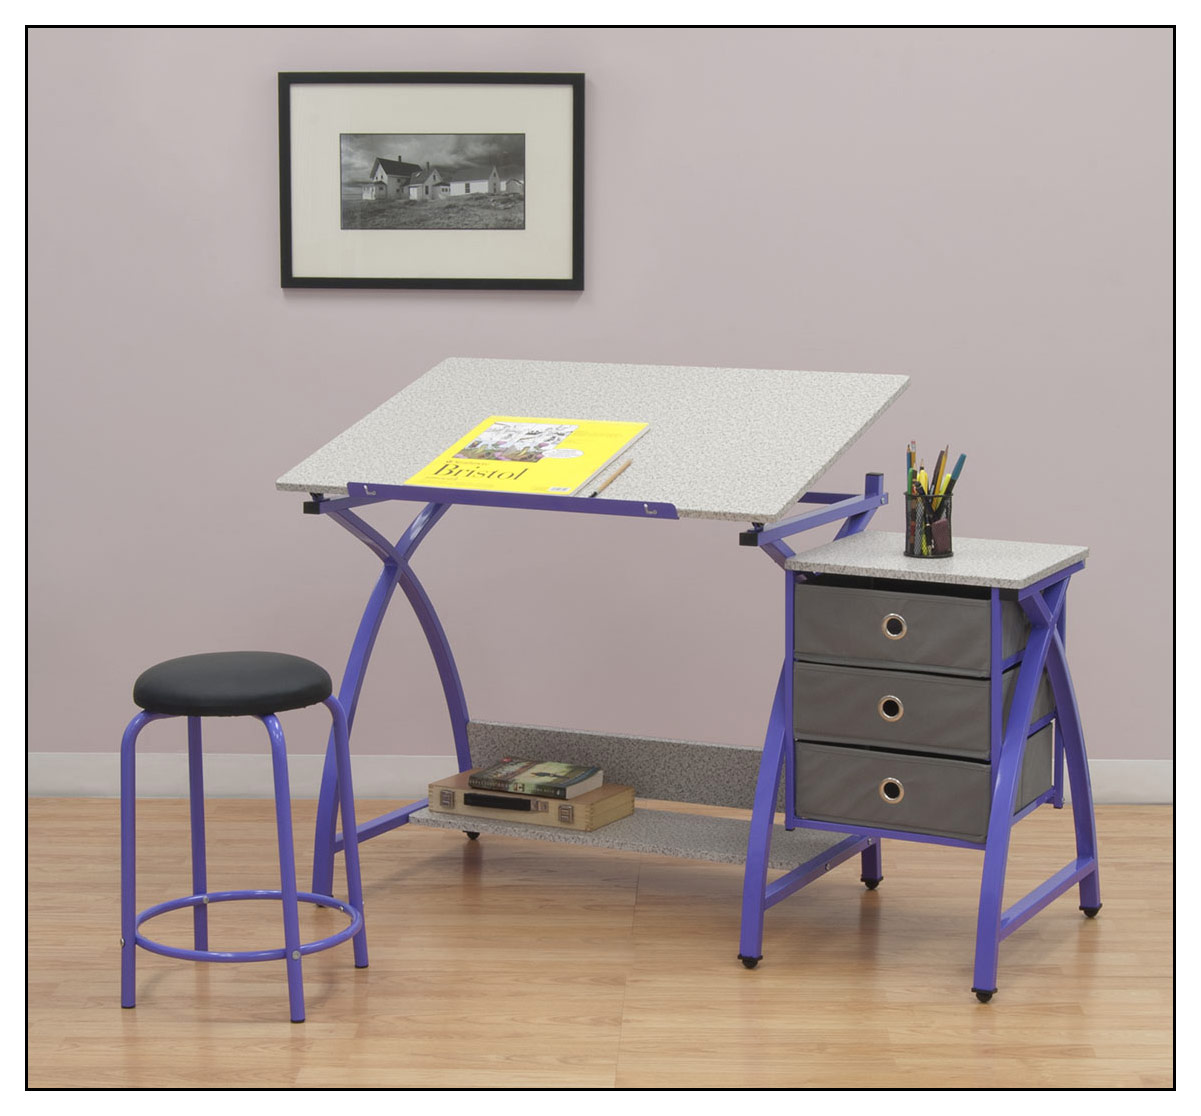 Studio Designs - Comet Center Craft Desk - Purple/Gray was $161.99 now $116.99 (28.0% off)